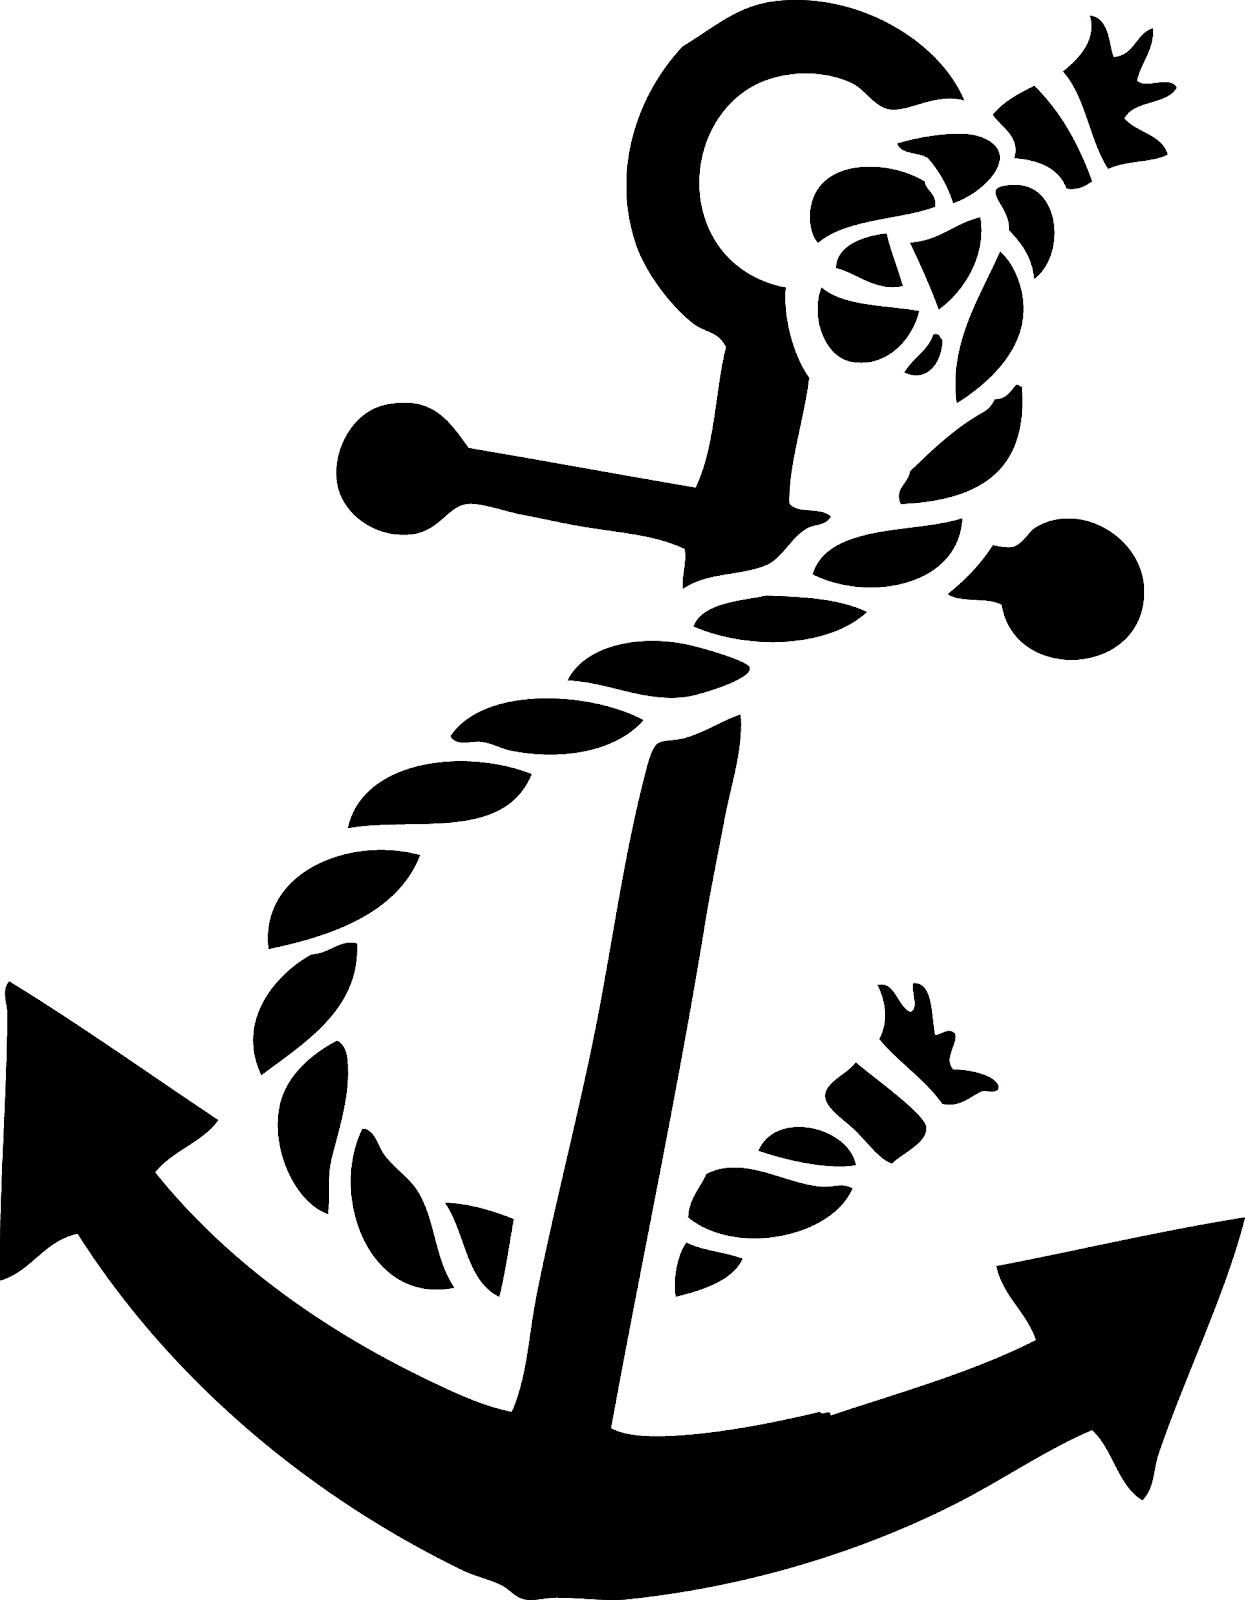 Pix For > Navy Blue Anchor Clip Art